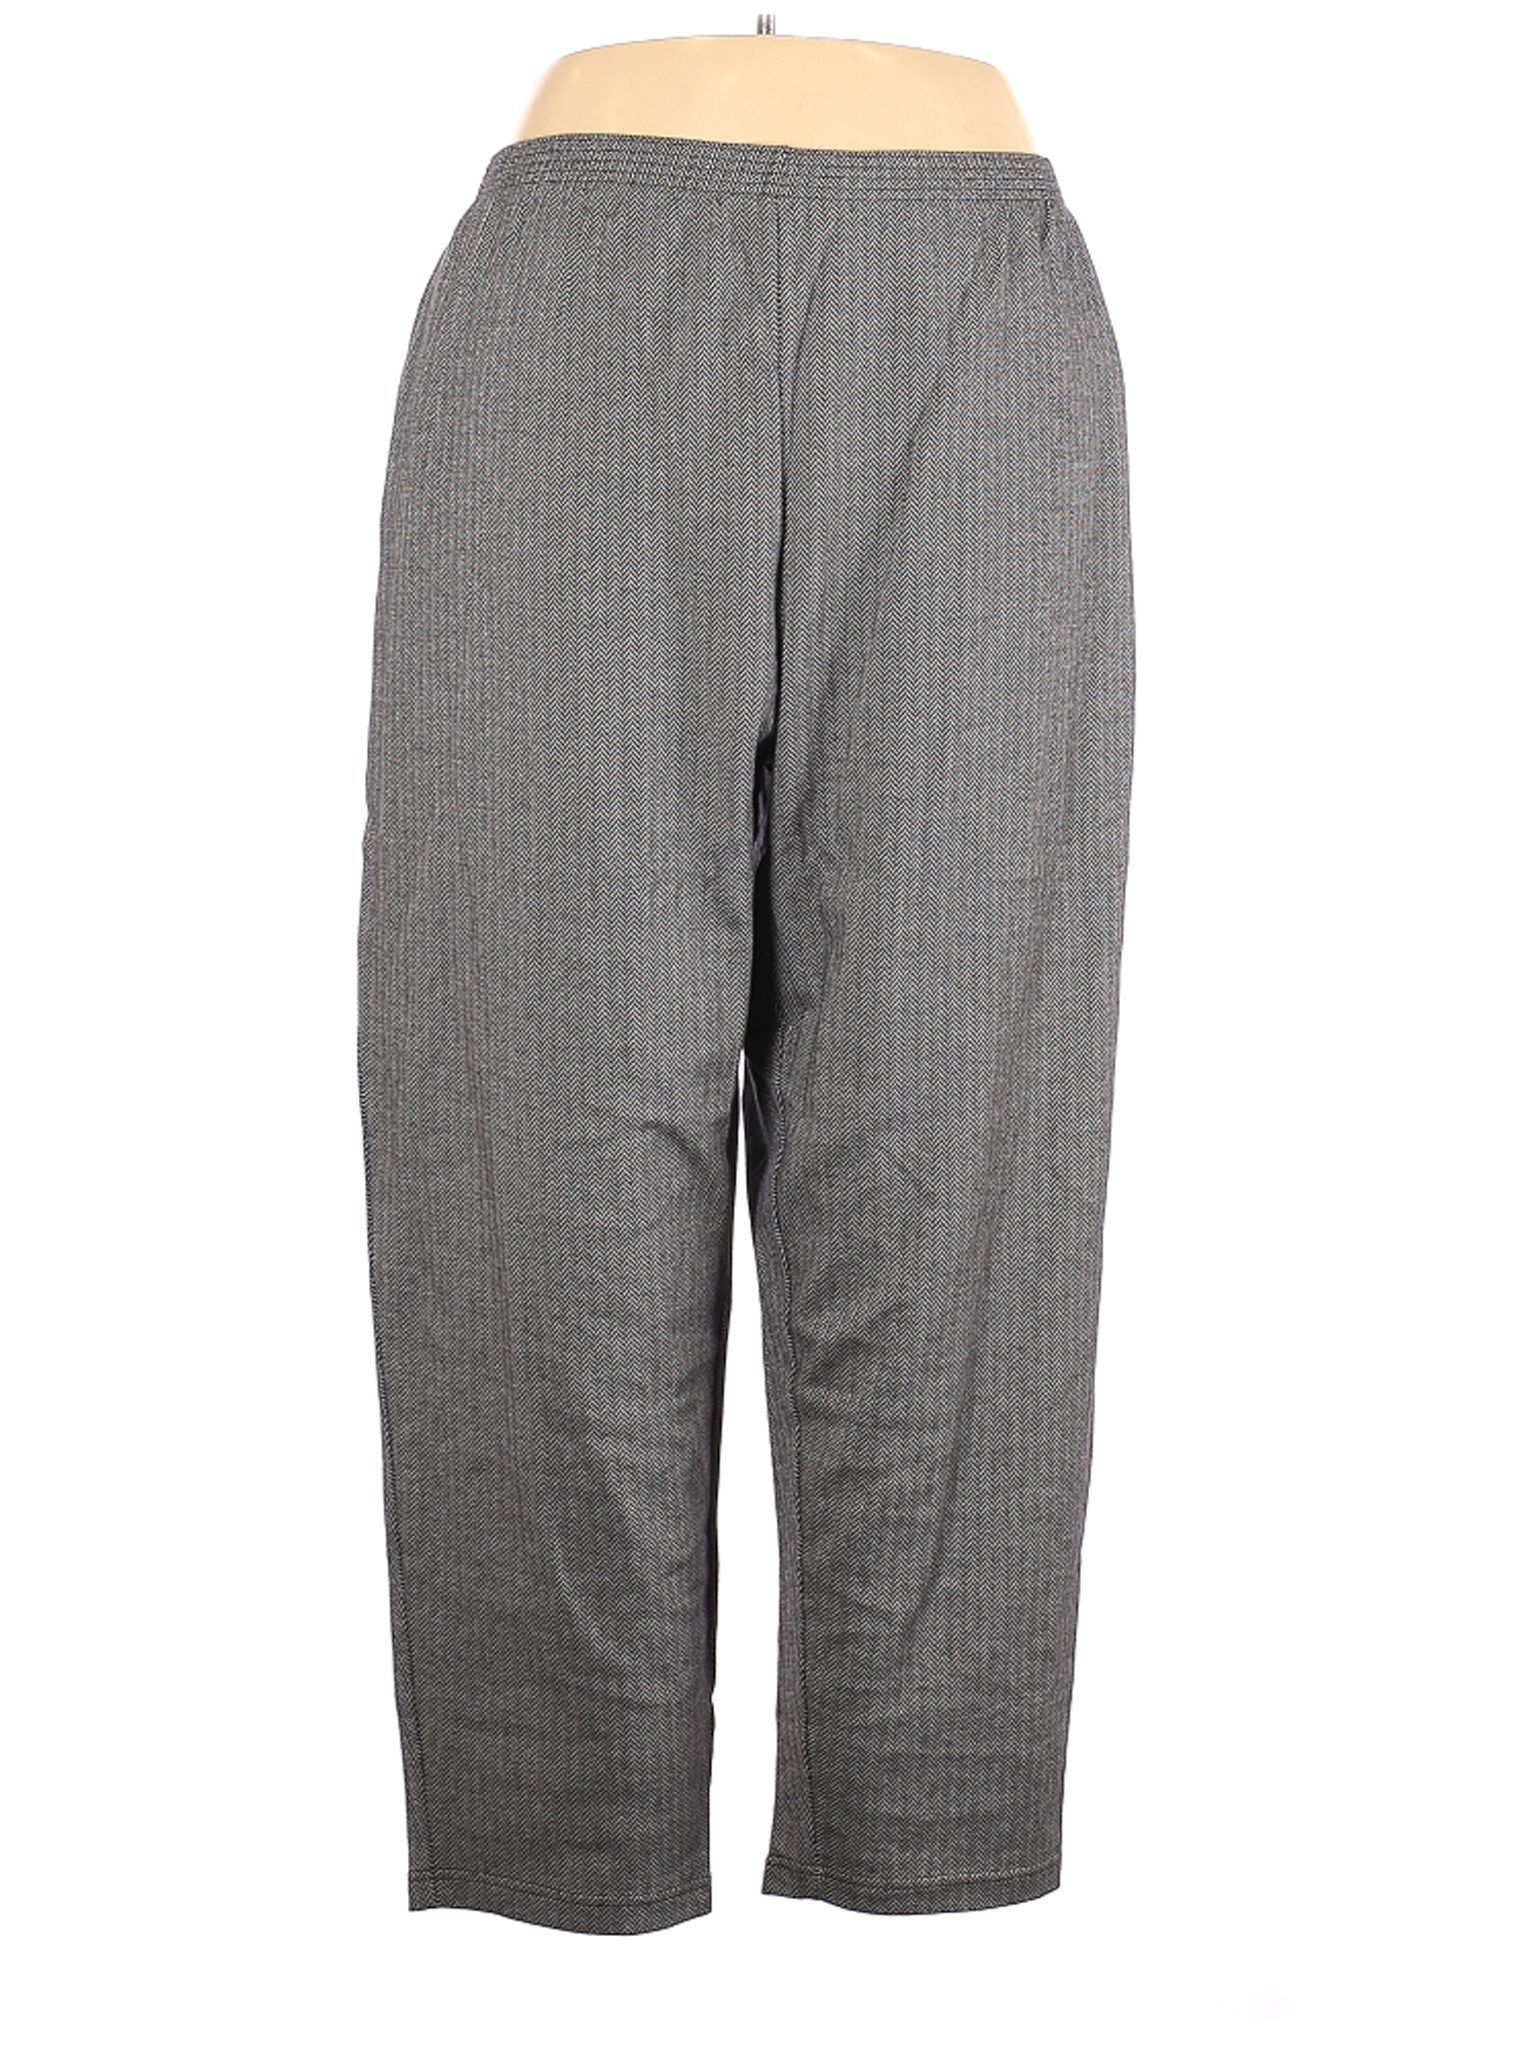 Bechamel Women Gray Casual Pants 3X Plus | eBay